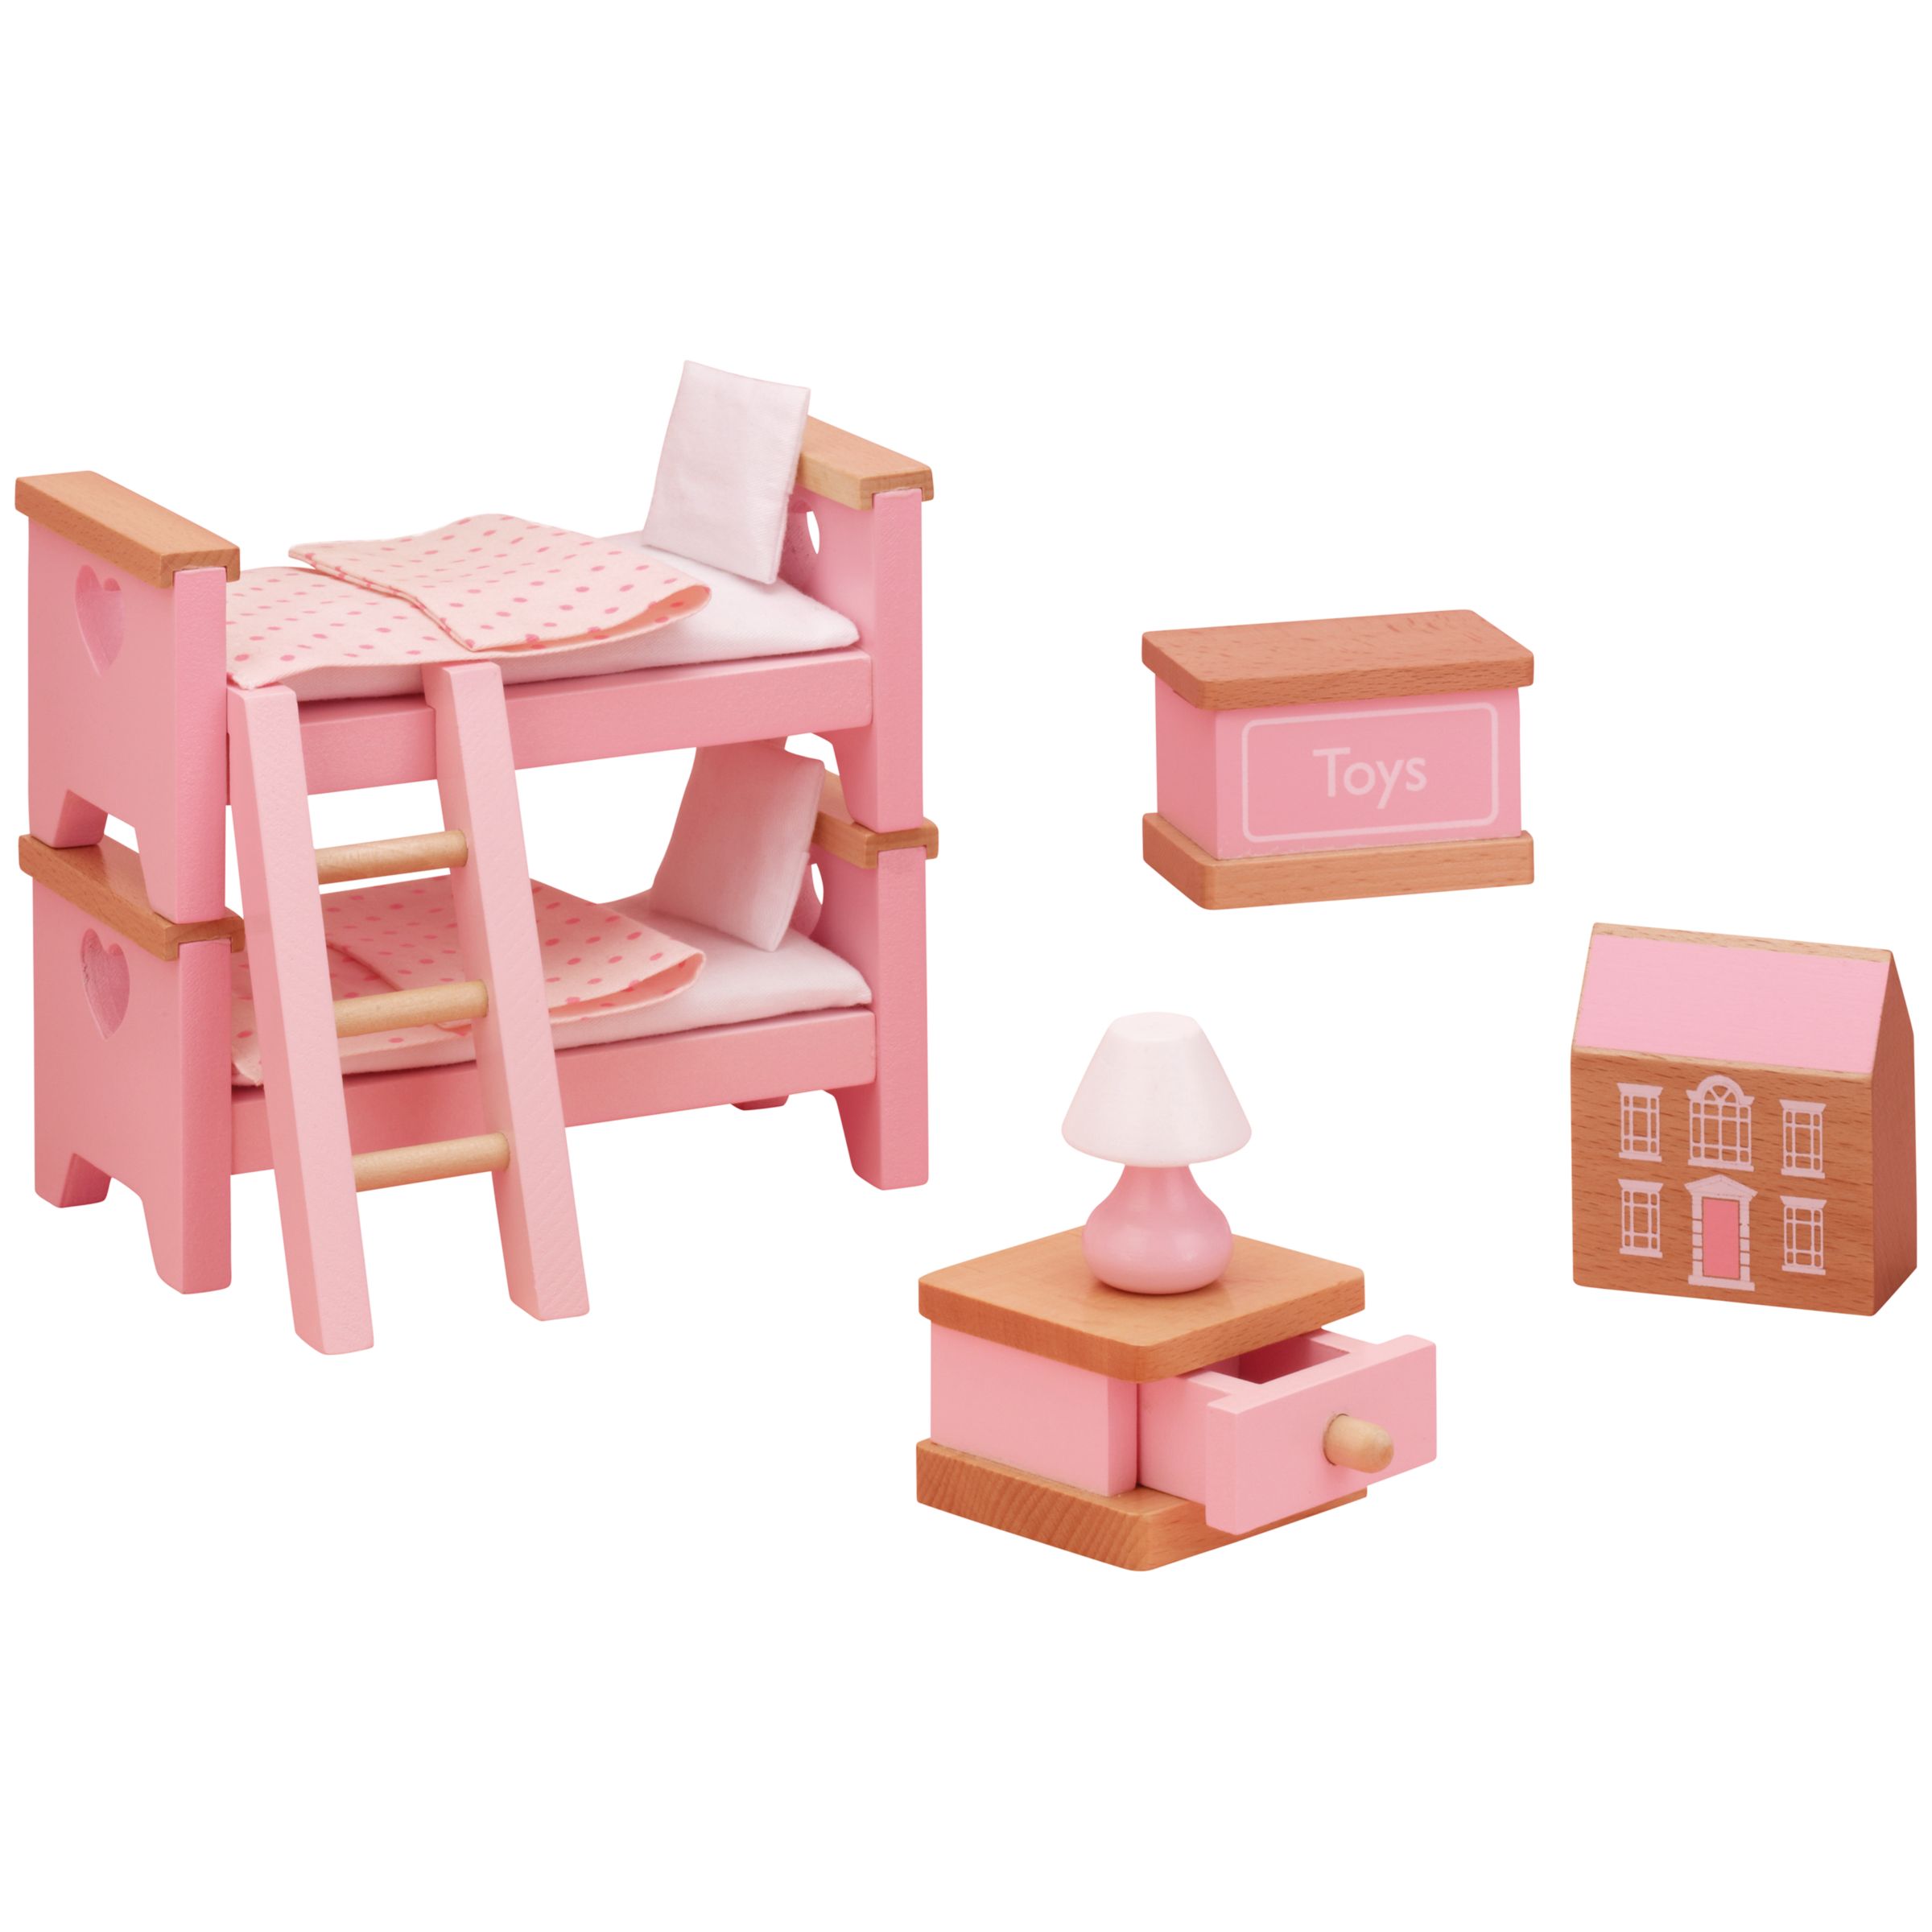 john lewis wooden dolls house furniture